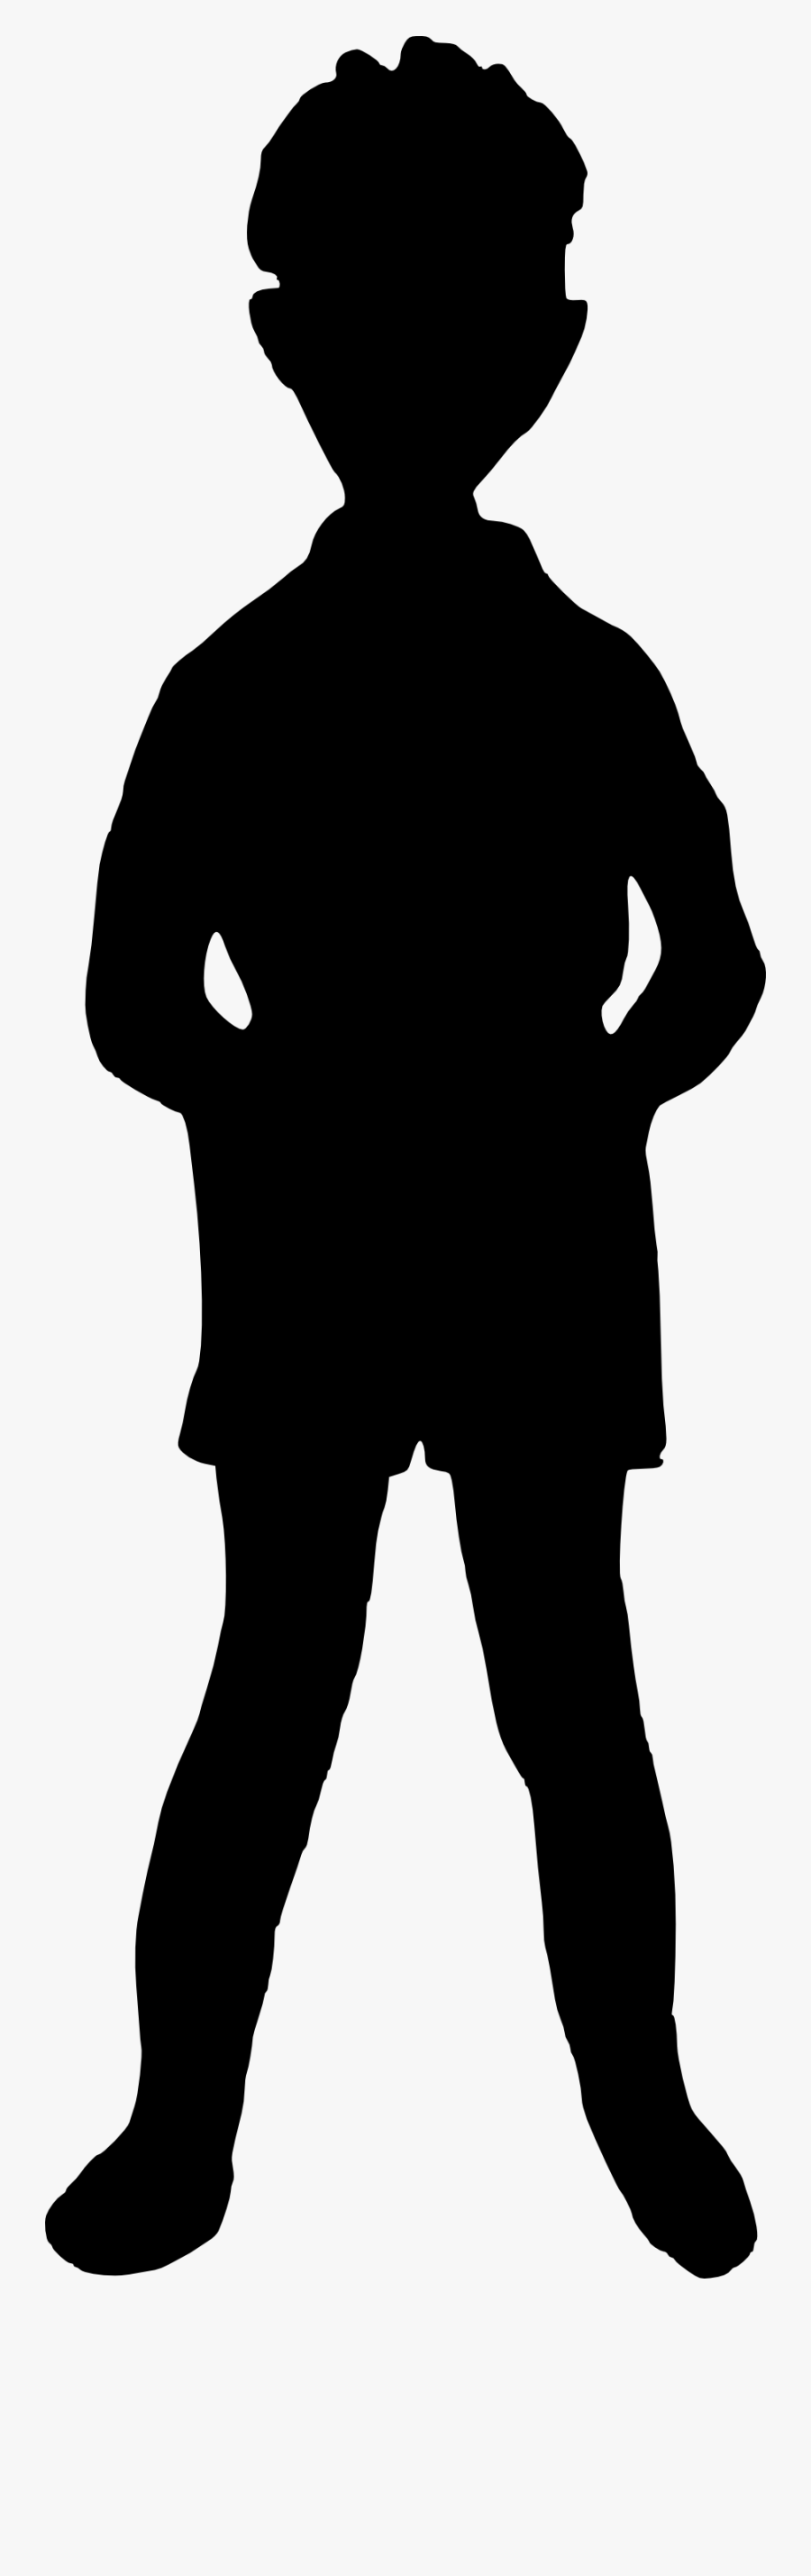 8 Boy Silhouette - Boy Silhouette Transparent Background, Transparent Clipart